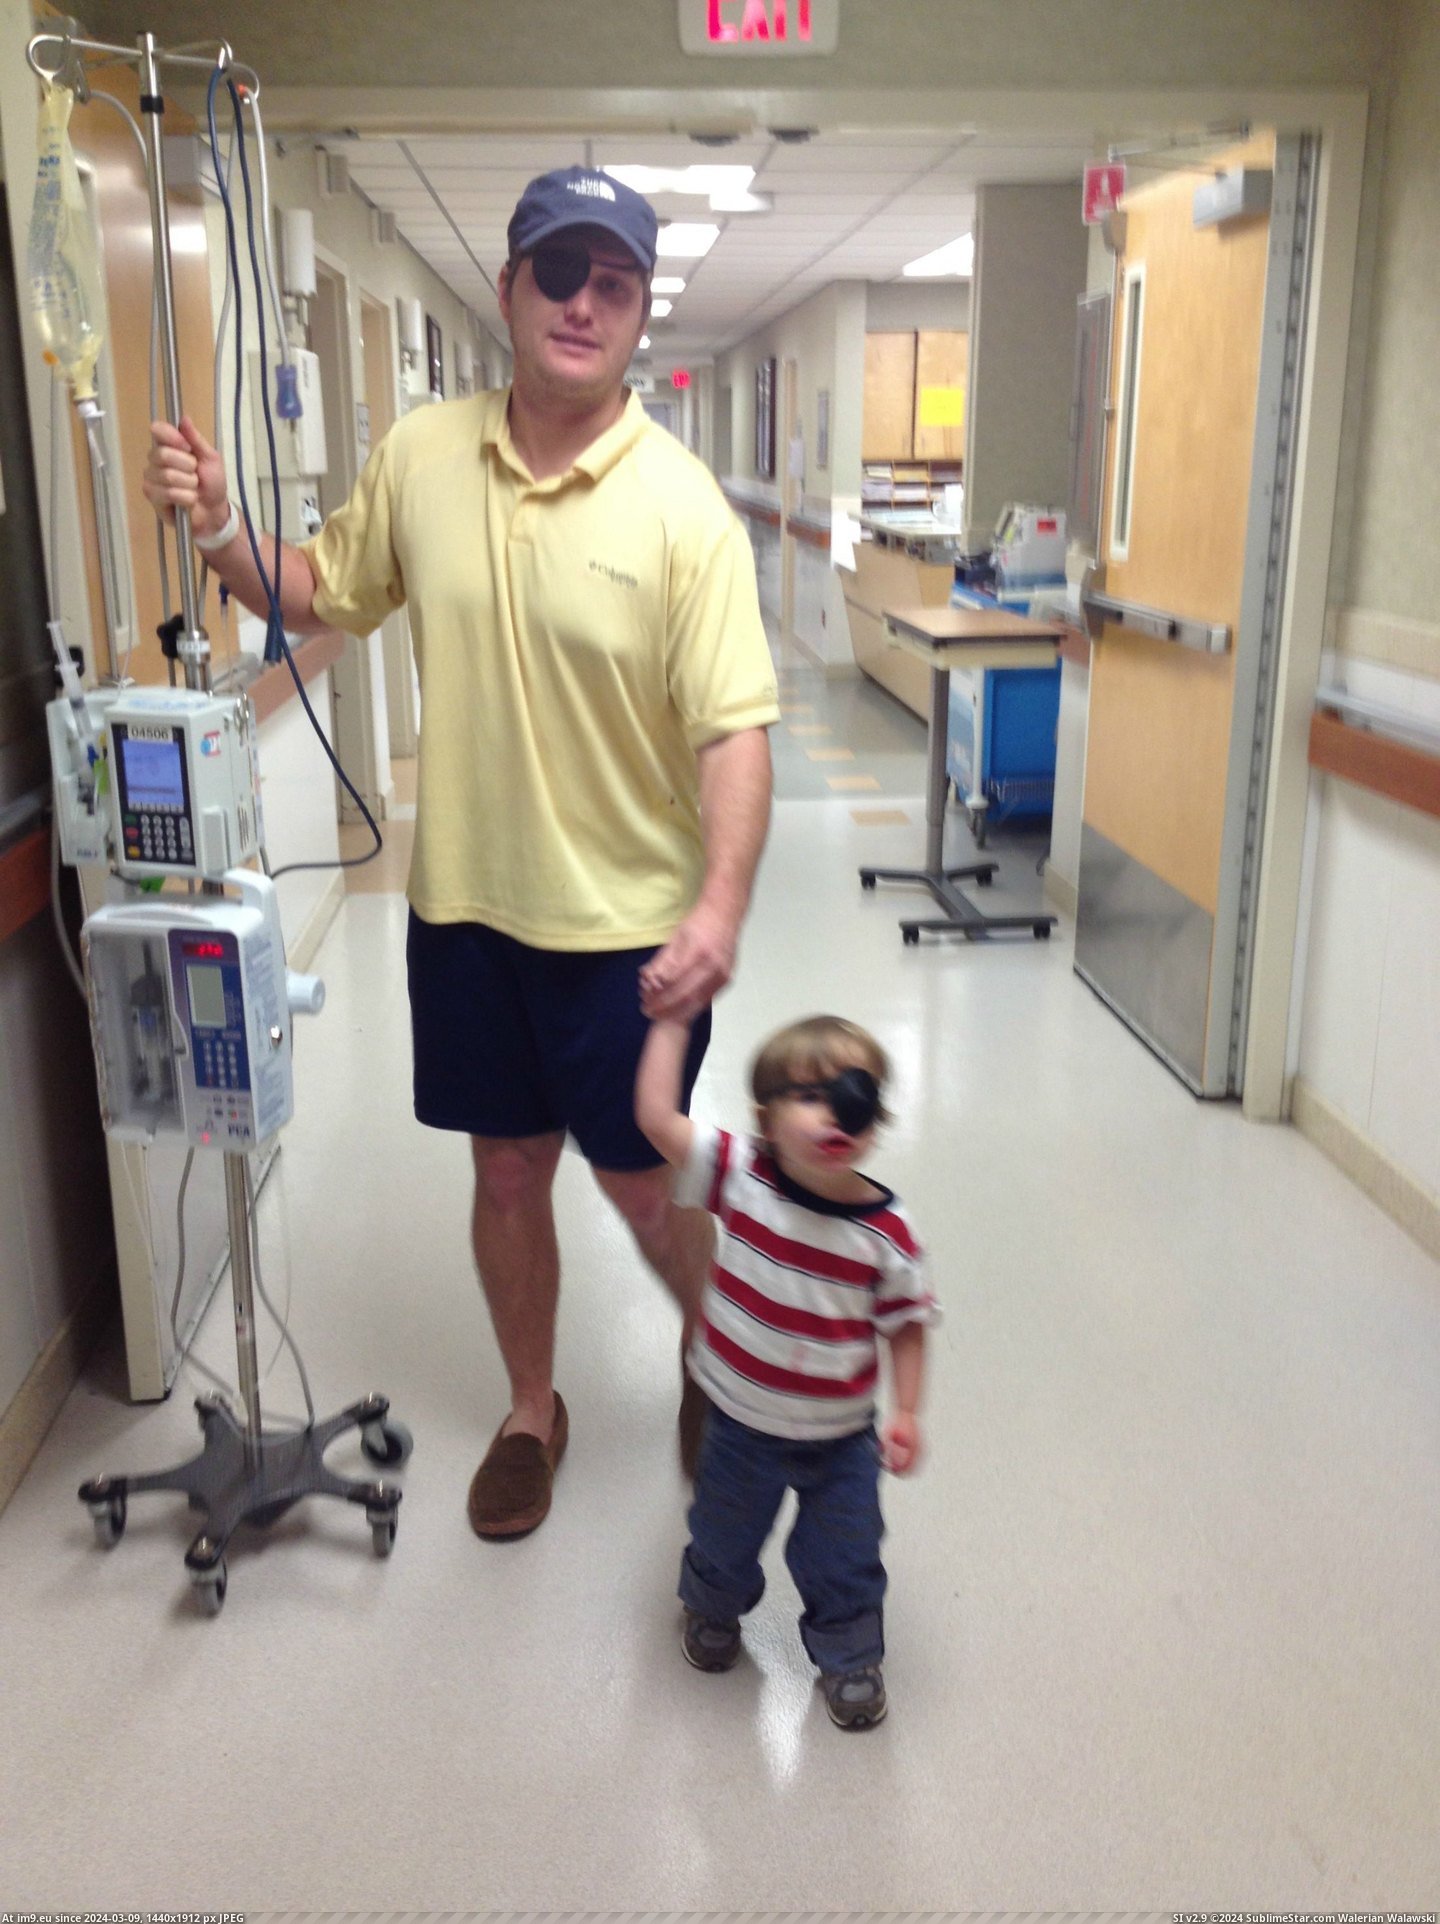 #Son #Walk #Bleed #Brainstem #Helping #Learn [Pics] After a bleed in my brainstem, this is my son, helping me learn to walk again. Pic. (Bild von album My r/PICS favs))